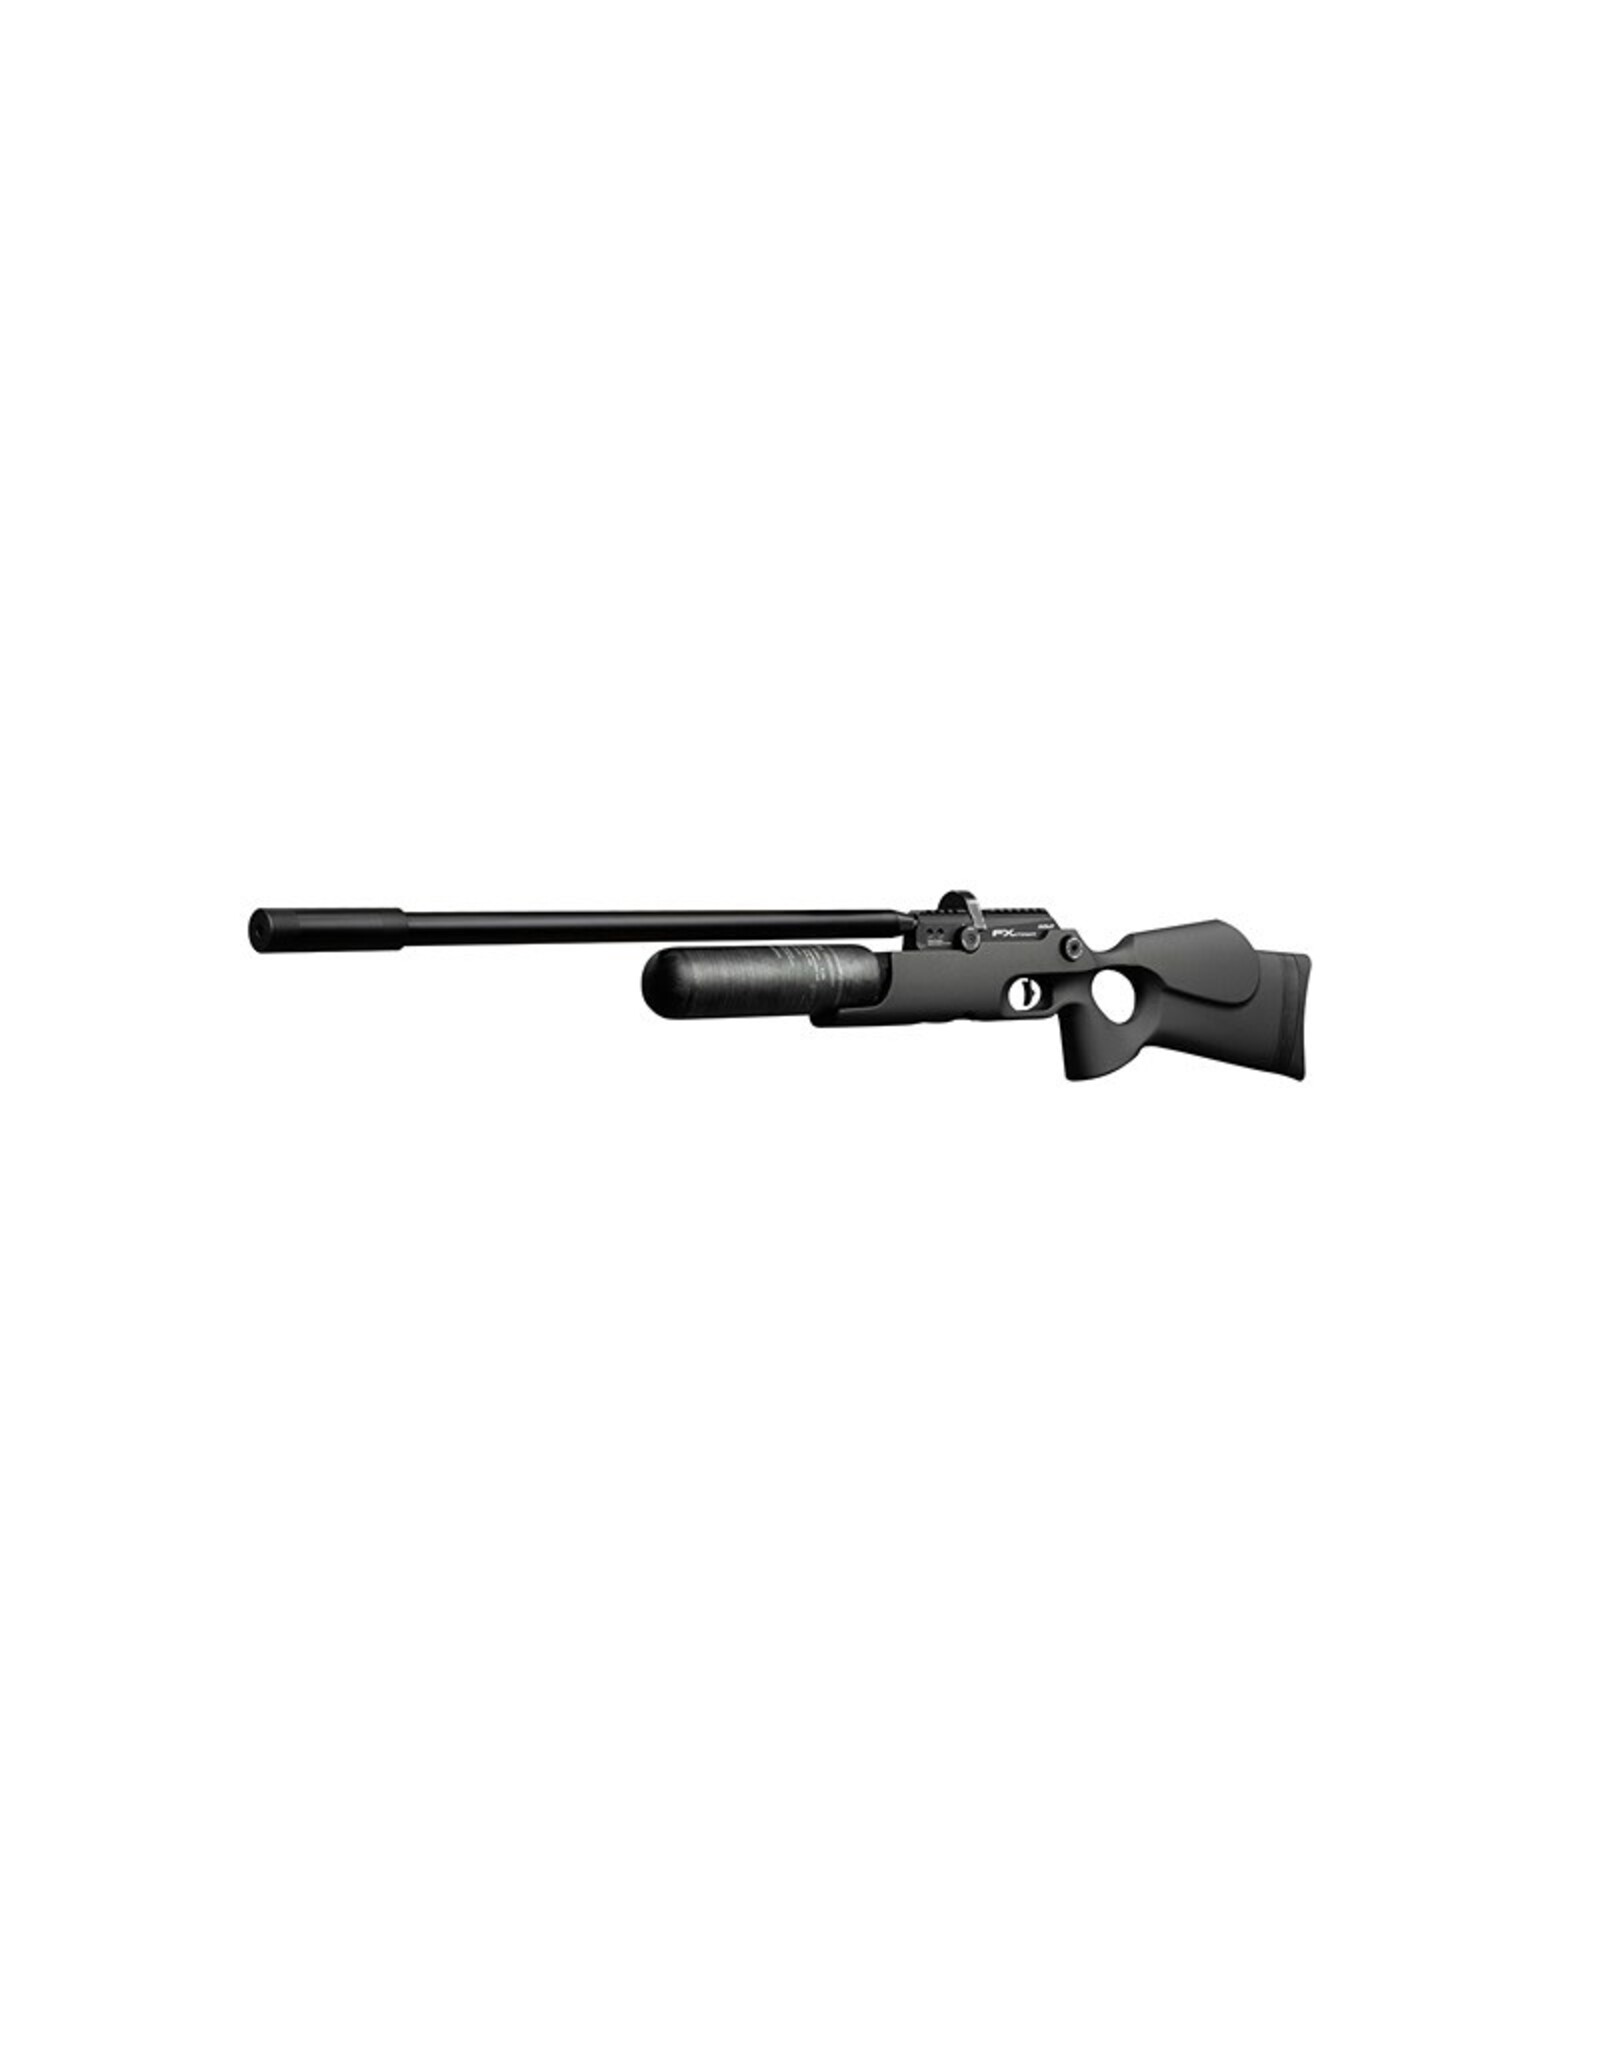 FX Airguns FX Crown VP MKII, Synthetic - 0.22 caliber - 500mm Barrel